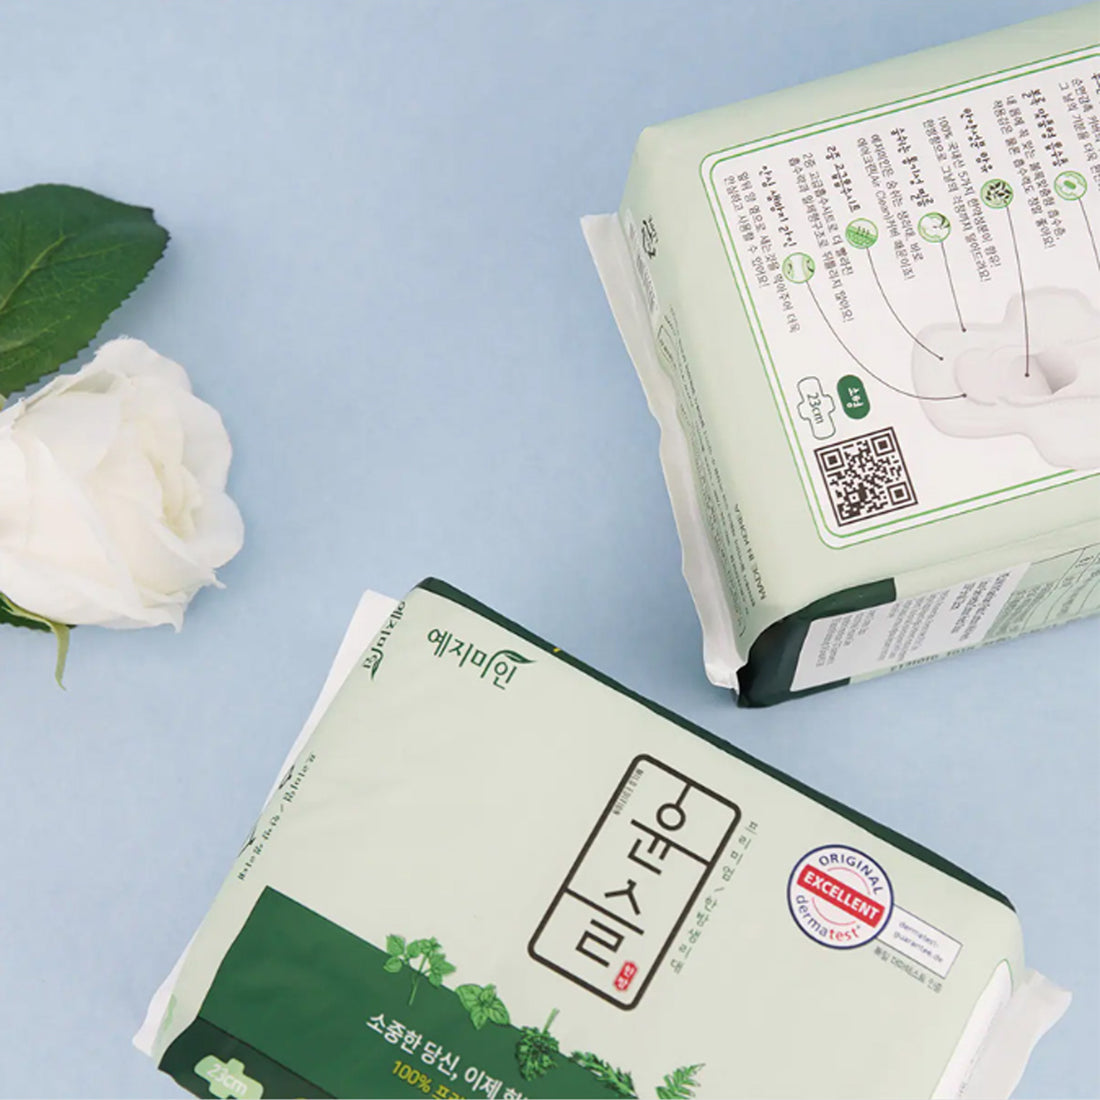 YEJIMIIN Sanitary Pads Cotton Touch Mild Herb (regular) 250mm 16pcs